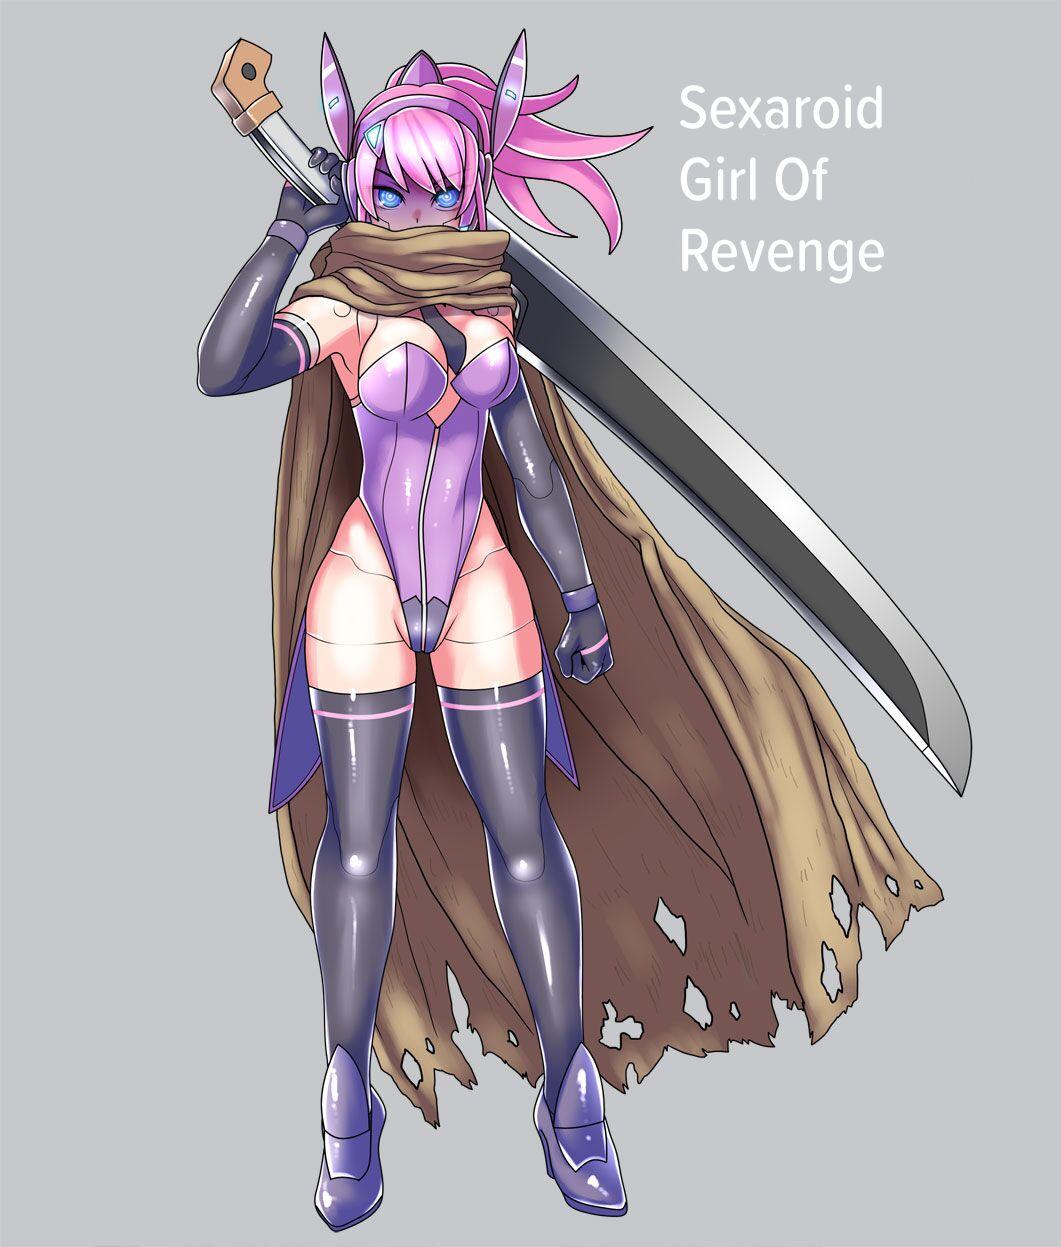 Bareback Fukushuu no Sekusaroido Shoujo | Sexaroid Girl of Revenge Ruiva - Picture 1